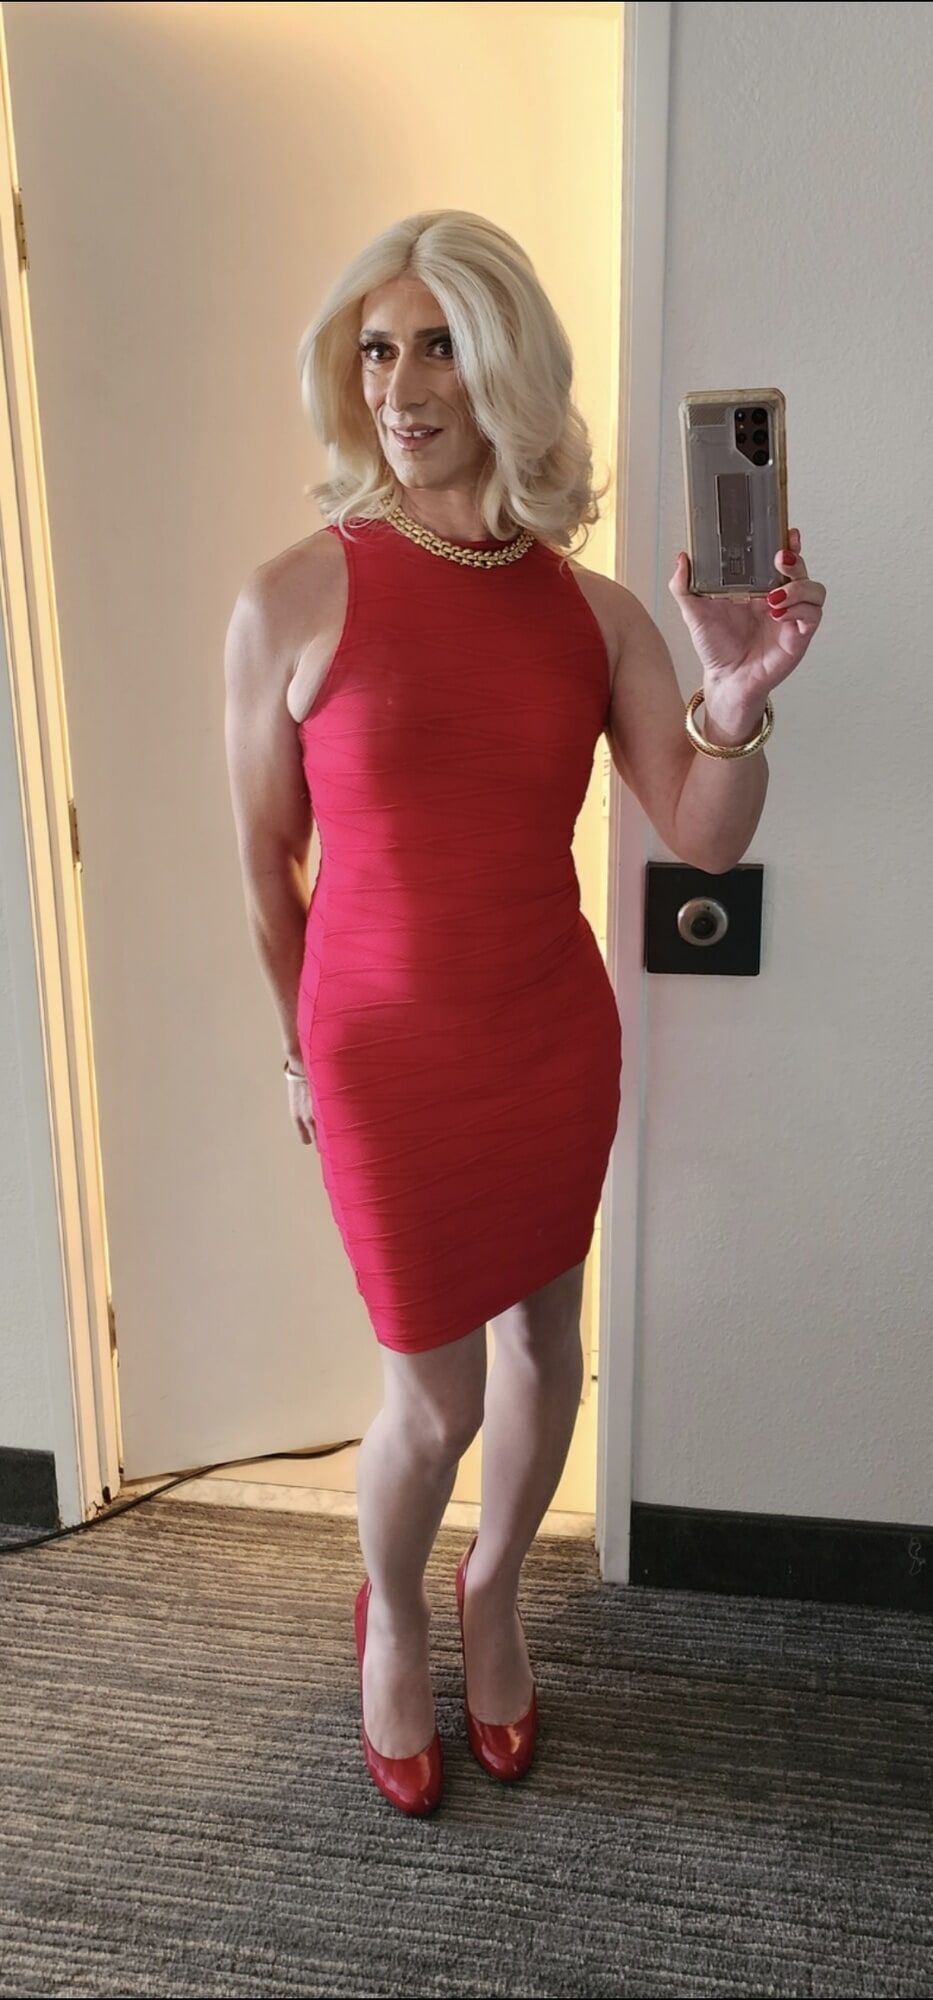 Red dress #4